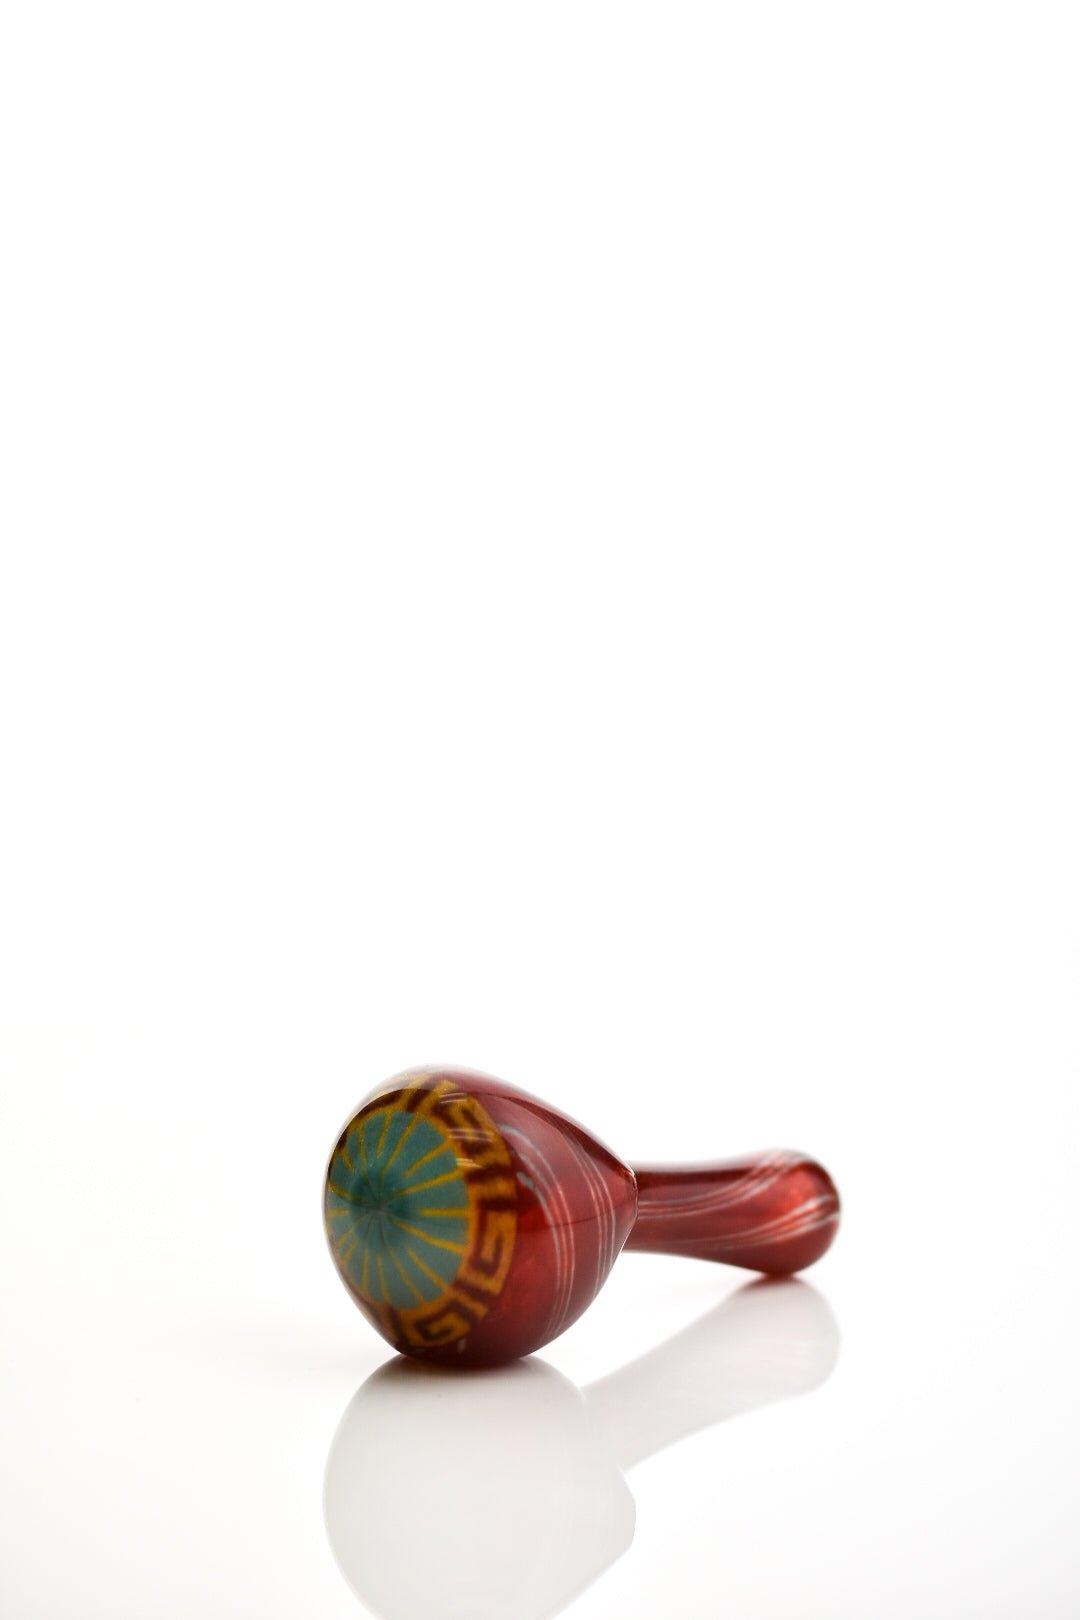 Hoffman Glass mini Caesar Red - Smoke Spot Smoke Shop